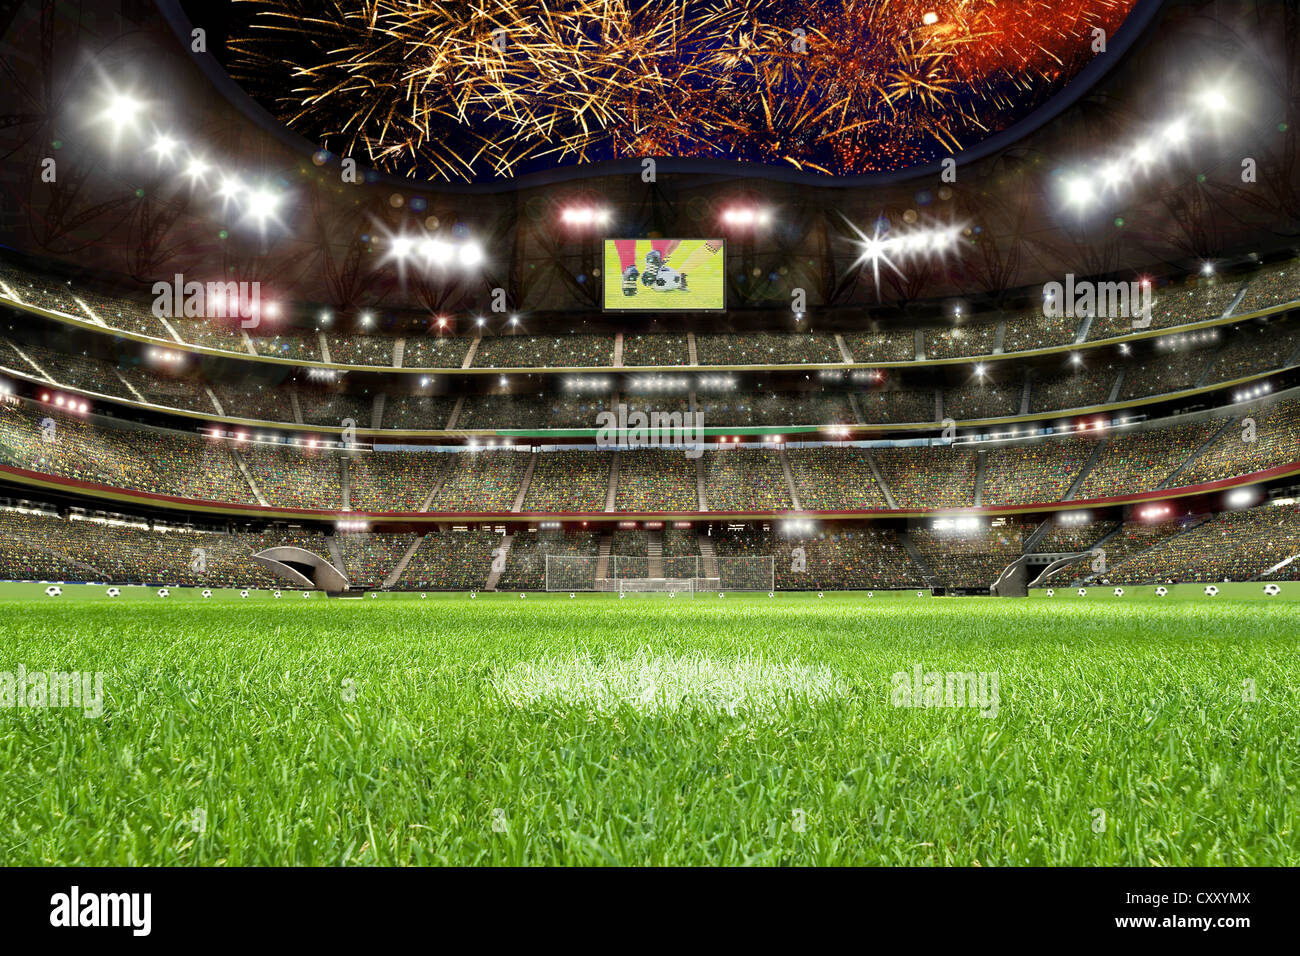 Soccer stadium, lawn, grand stand, fireworks Stock Photo